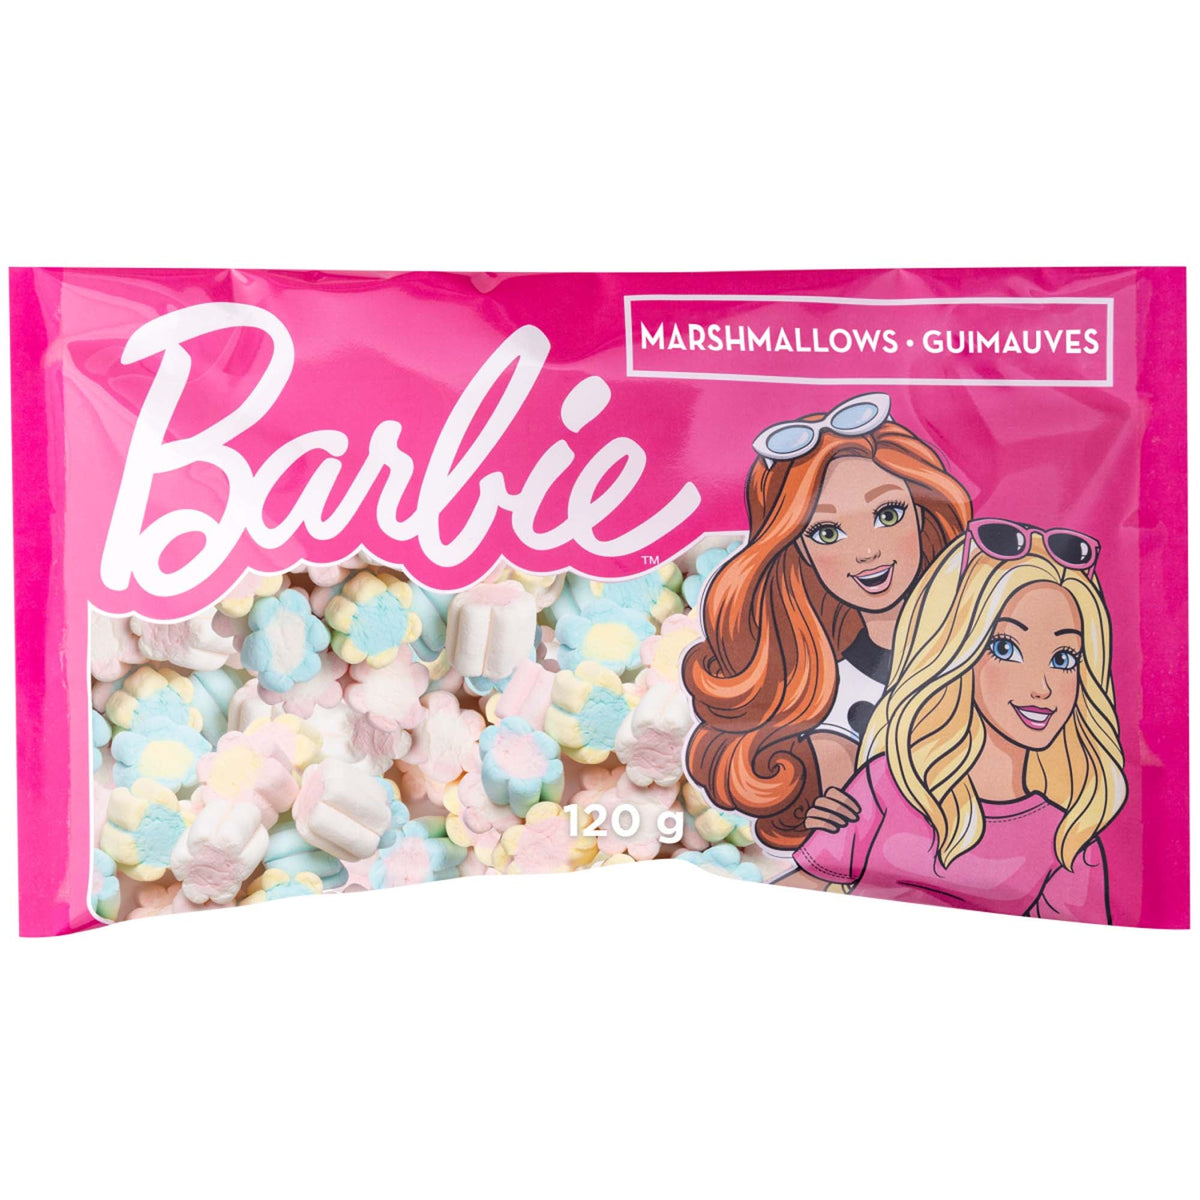 REGAL CONFECTION INC. impulse buying Barbie Marshmallows Bag, 120 g, 1 Count